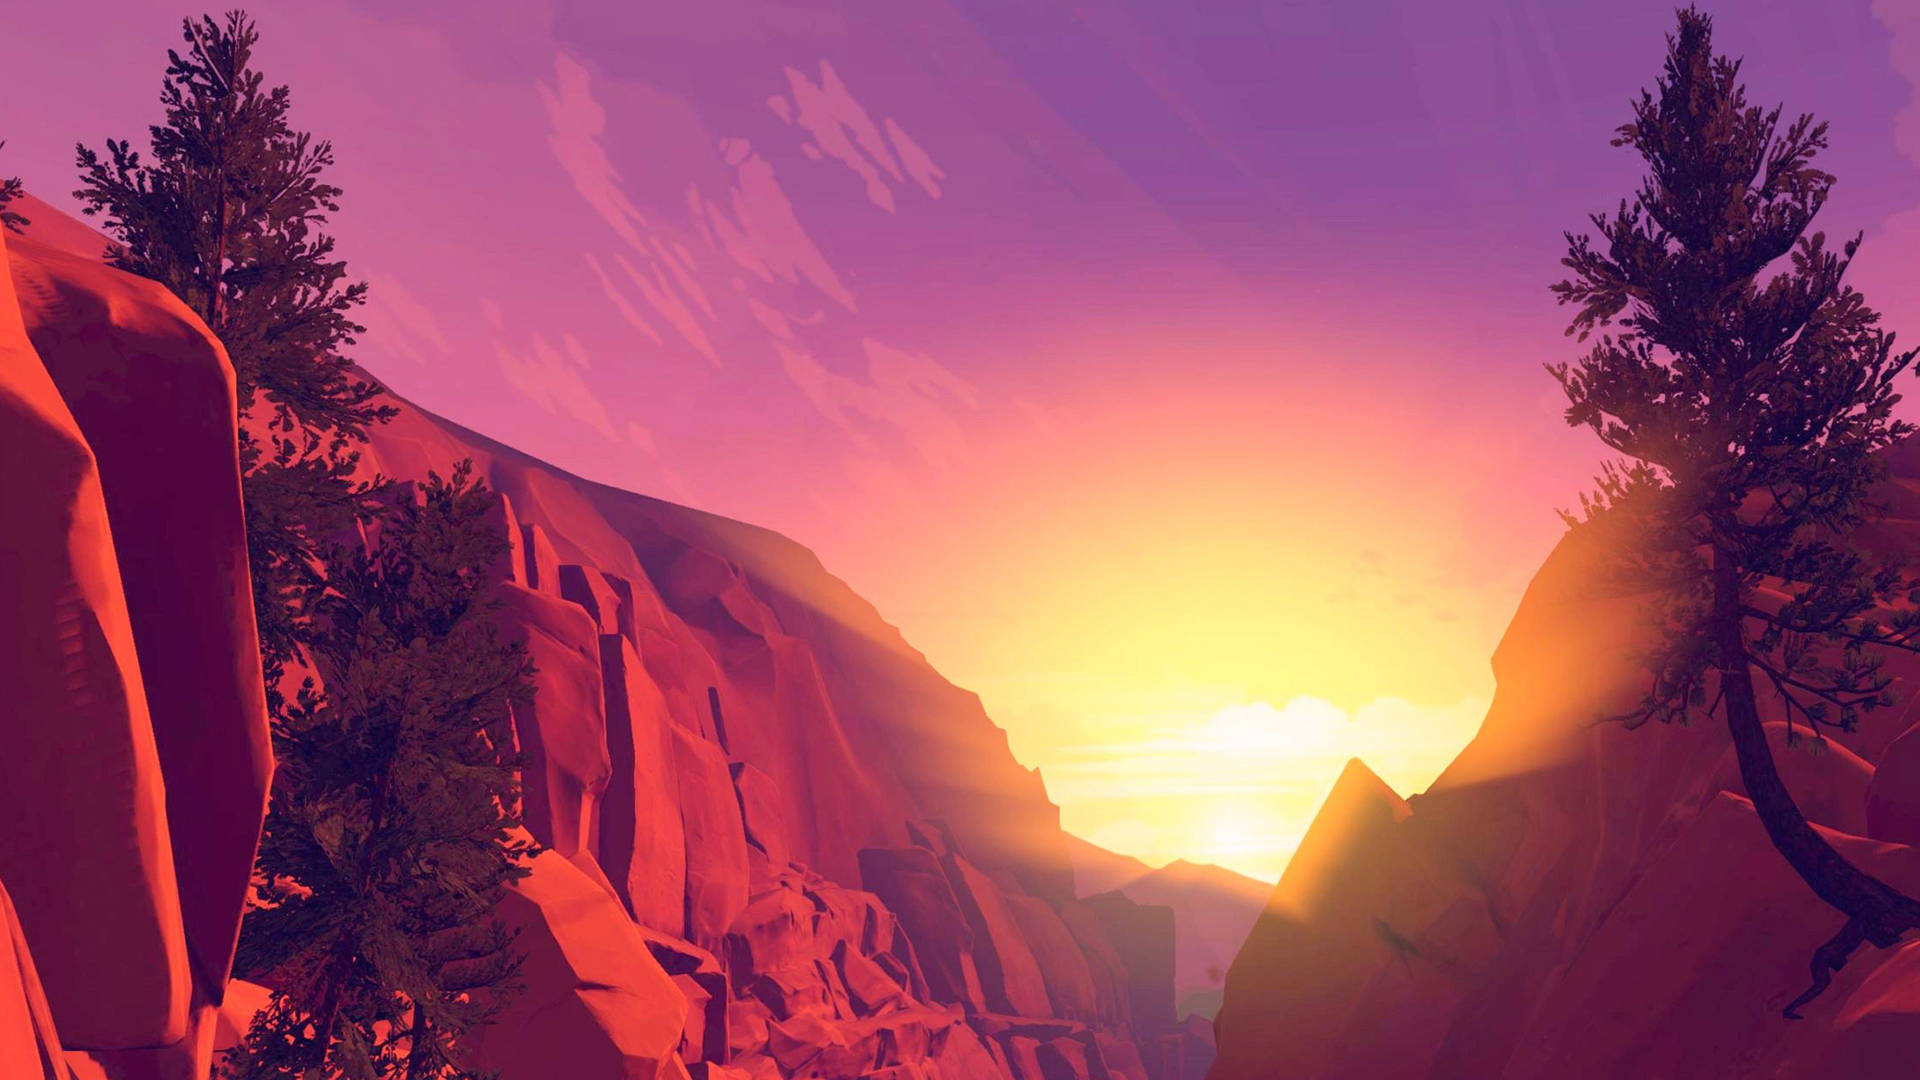 4k Firewatch Sunrise And Purple Sky Background